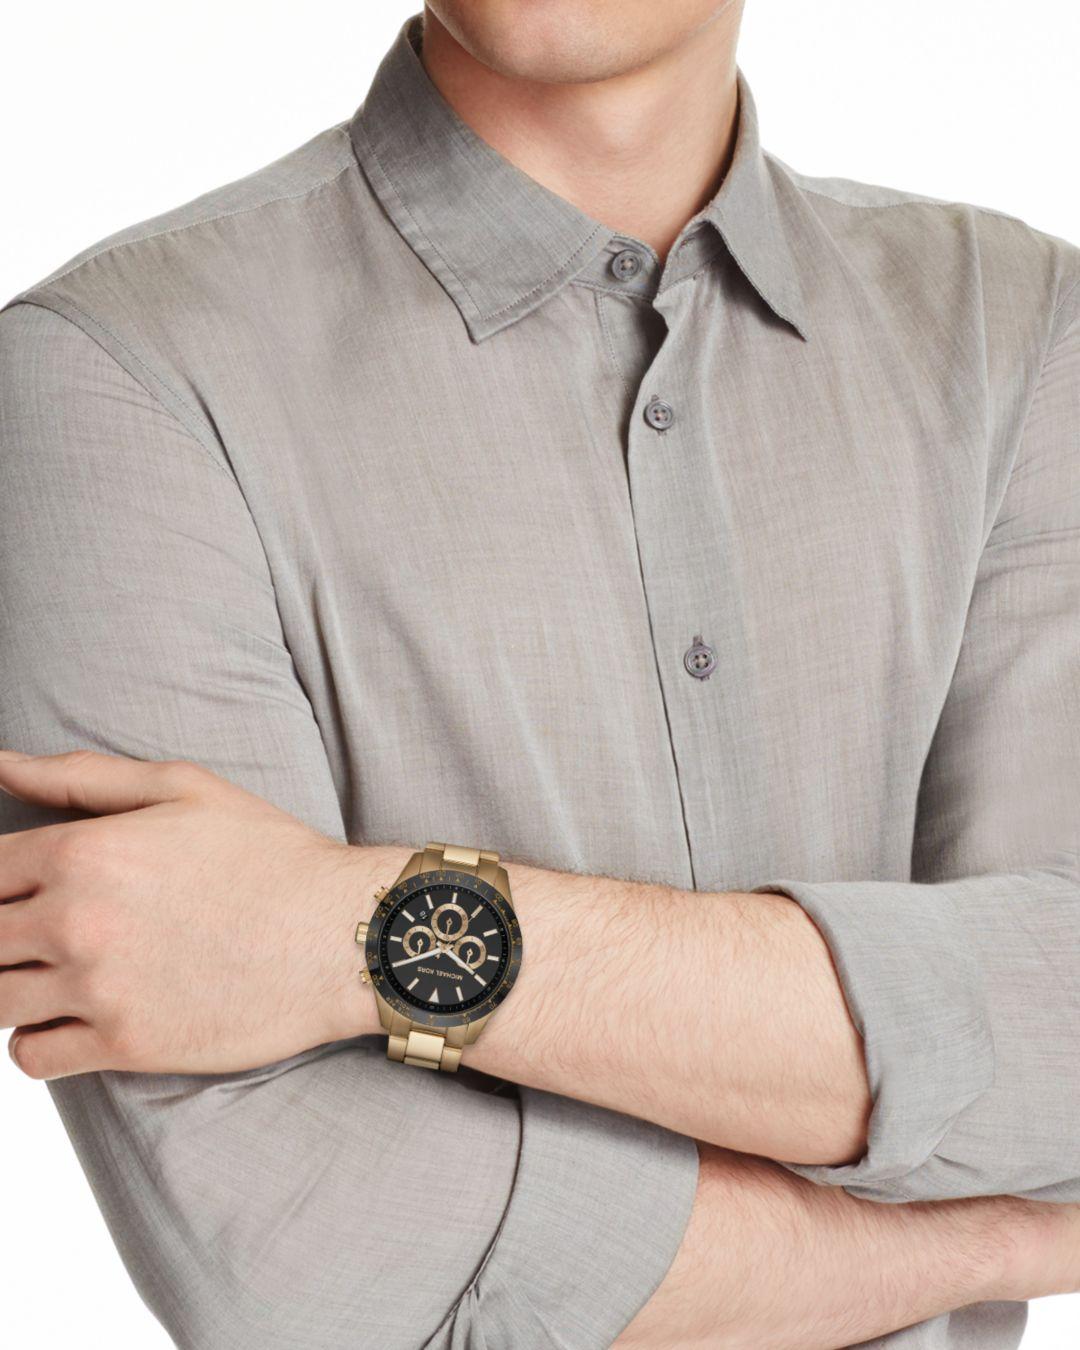 michael kors oversized watch